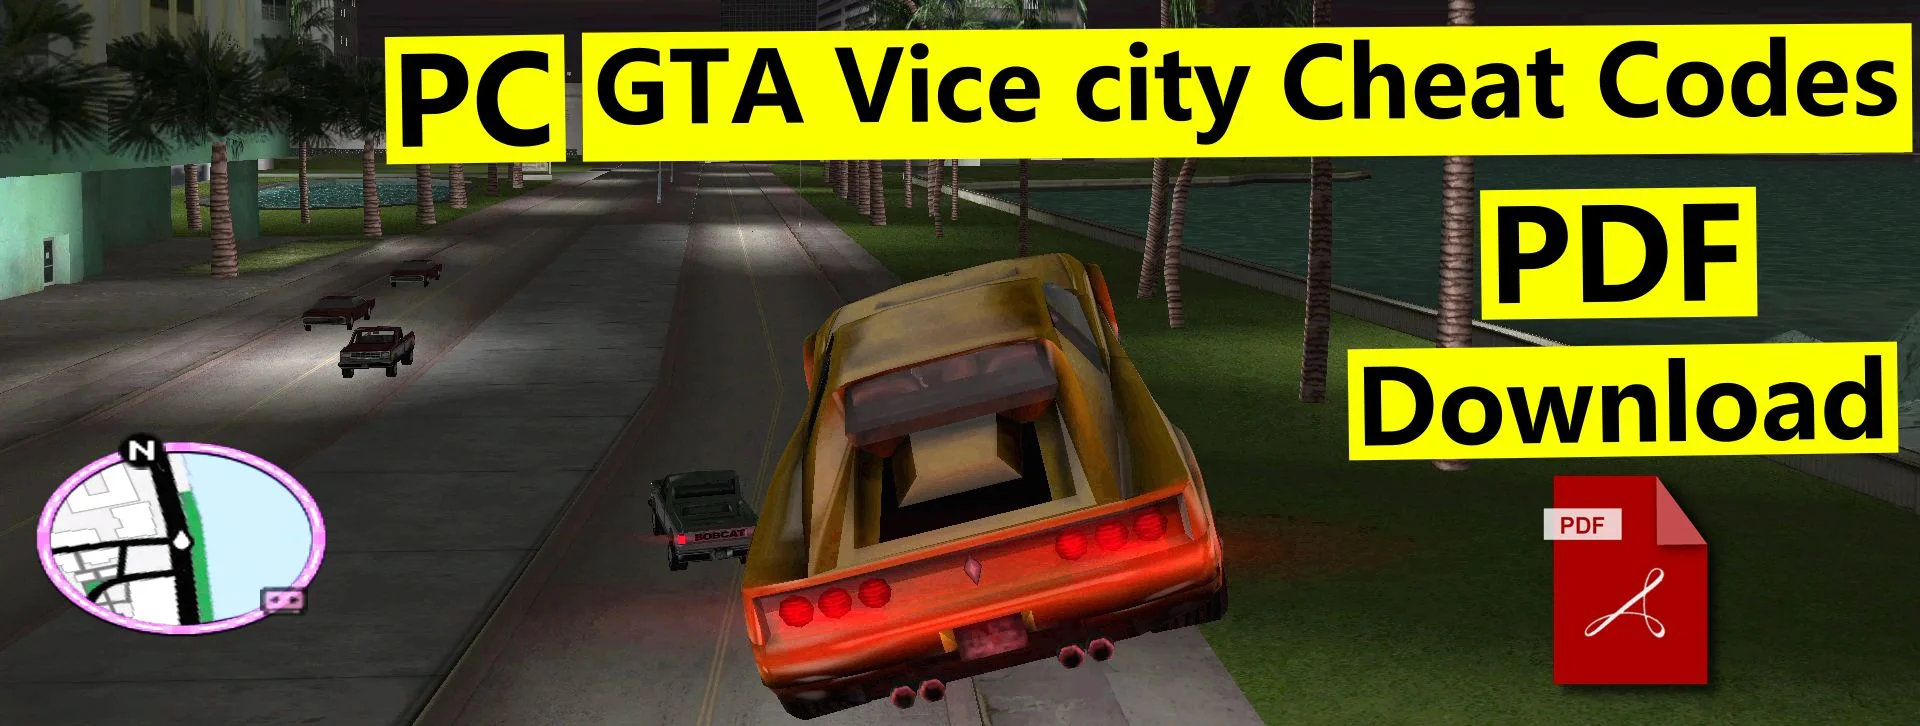 GTA Vice City Cheat Codes, PDF, Sports